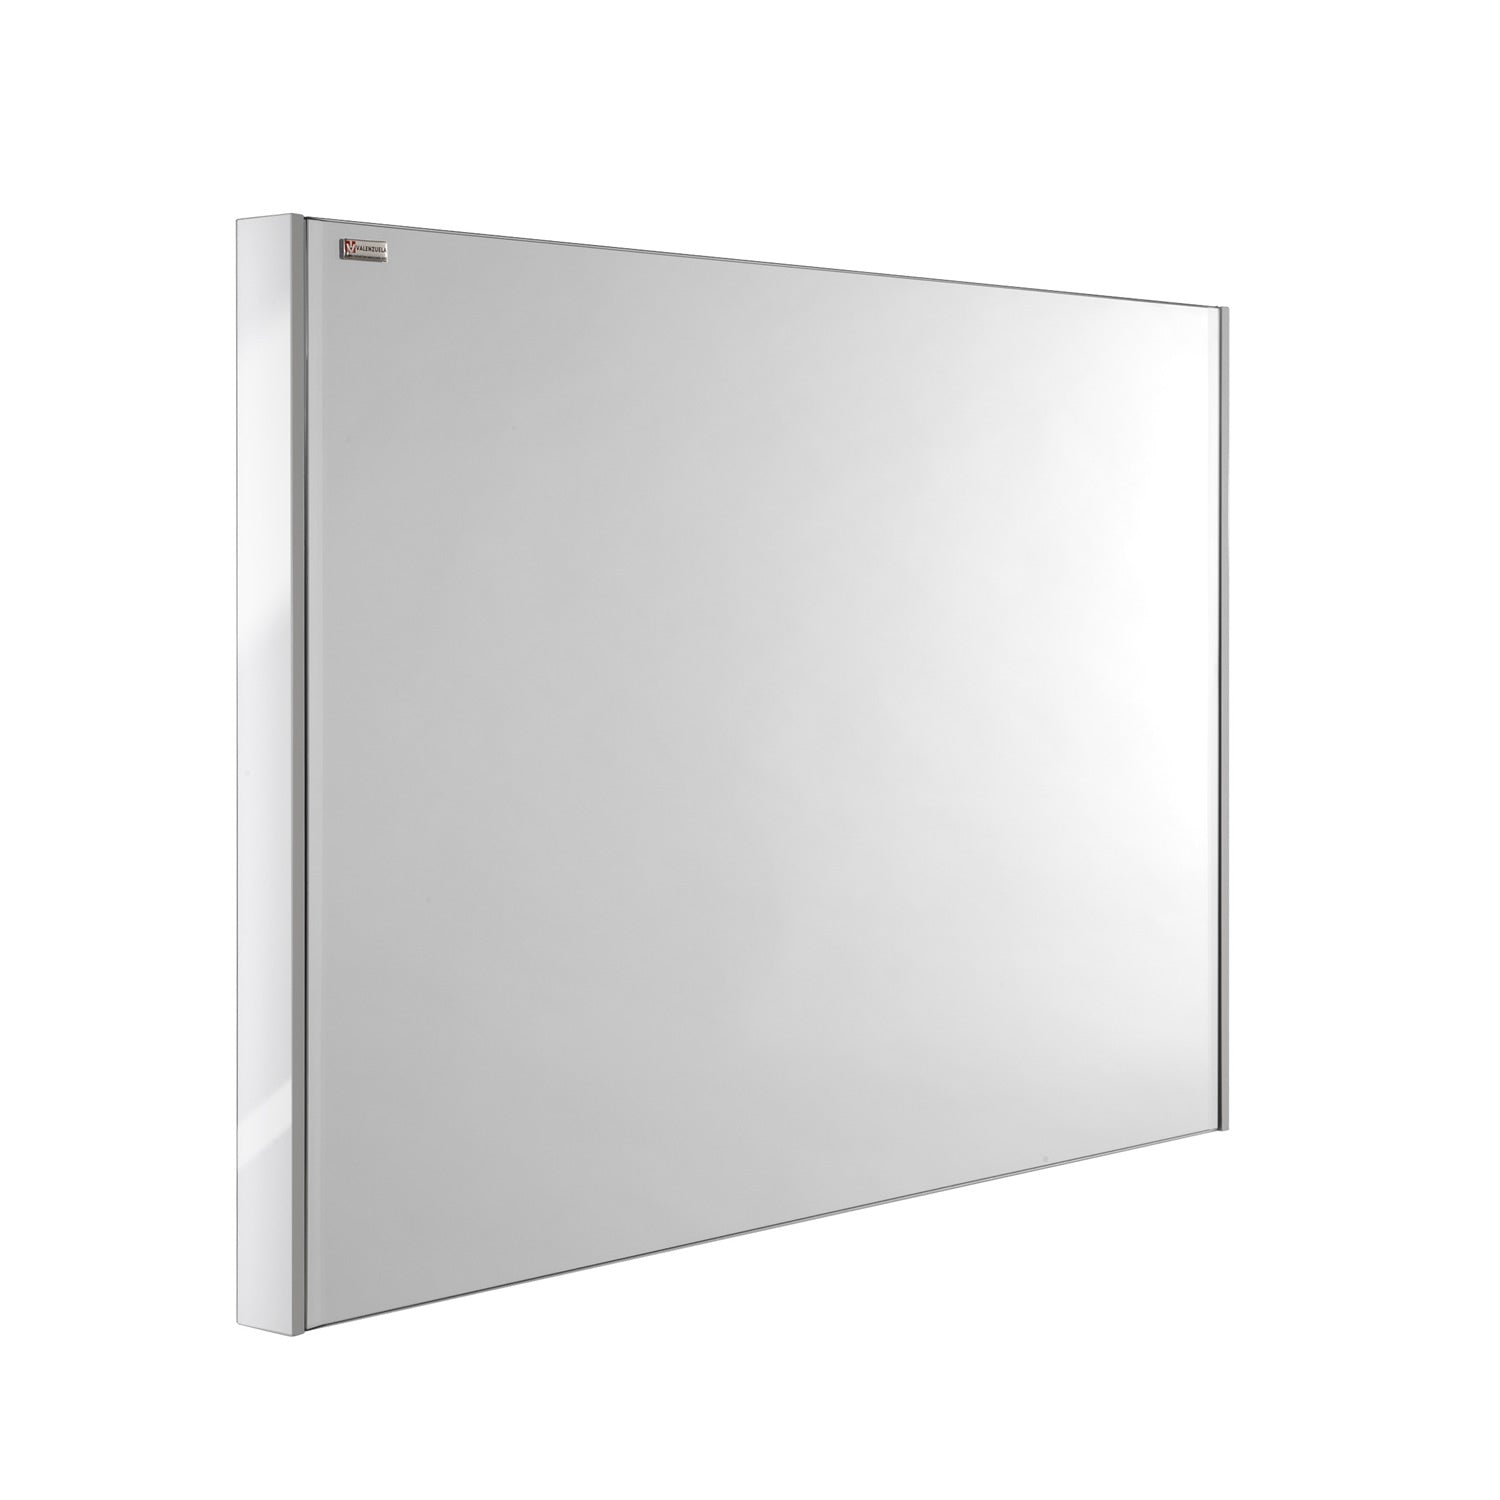 Slim Frame Bathroom Vanity Mirror, Wall Mount, Serie Dune/Solco by VALENZUELA